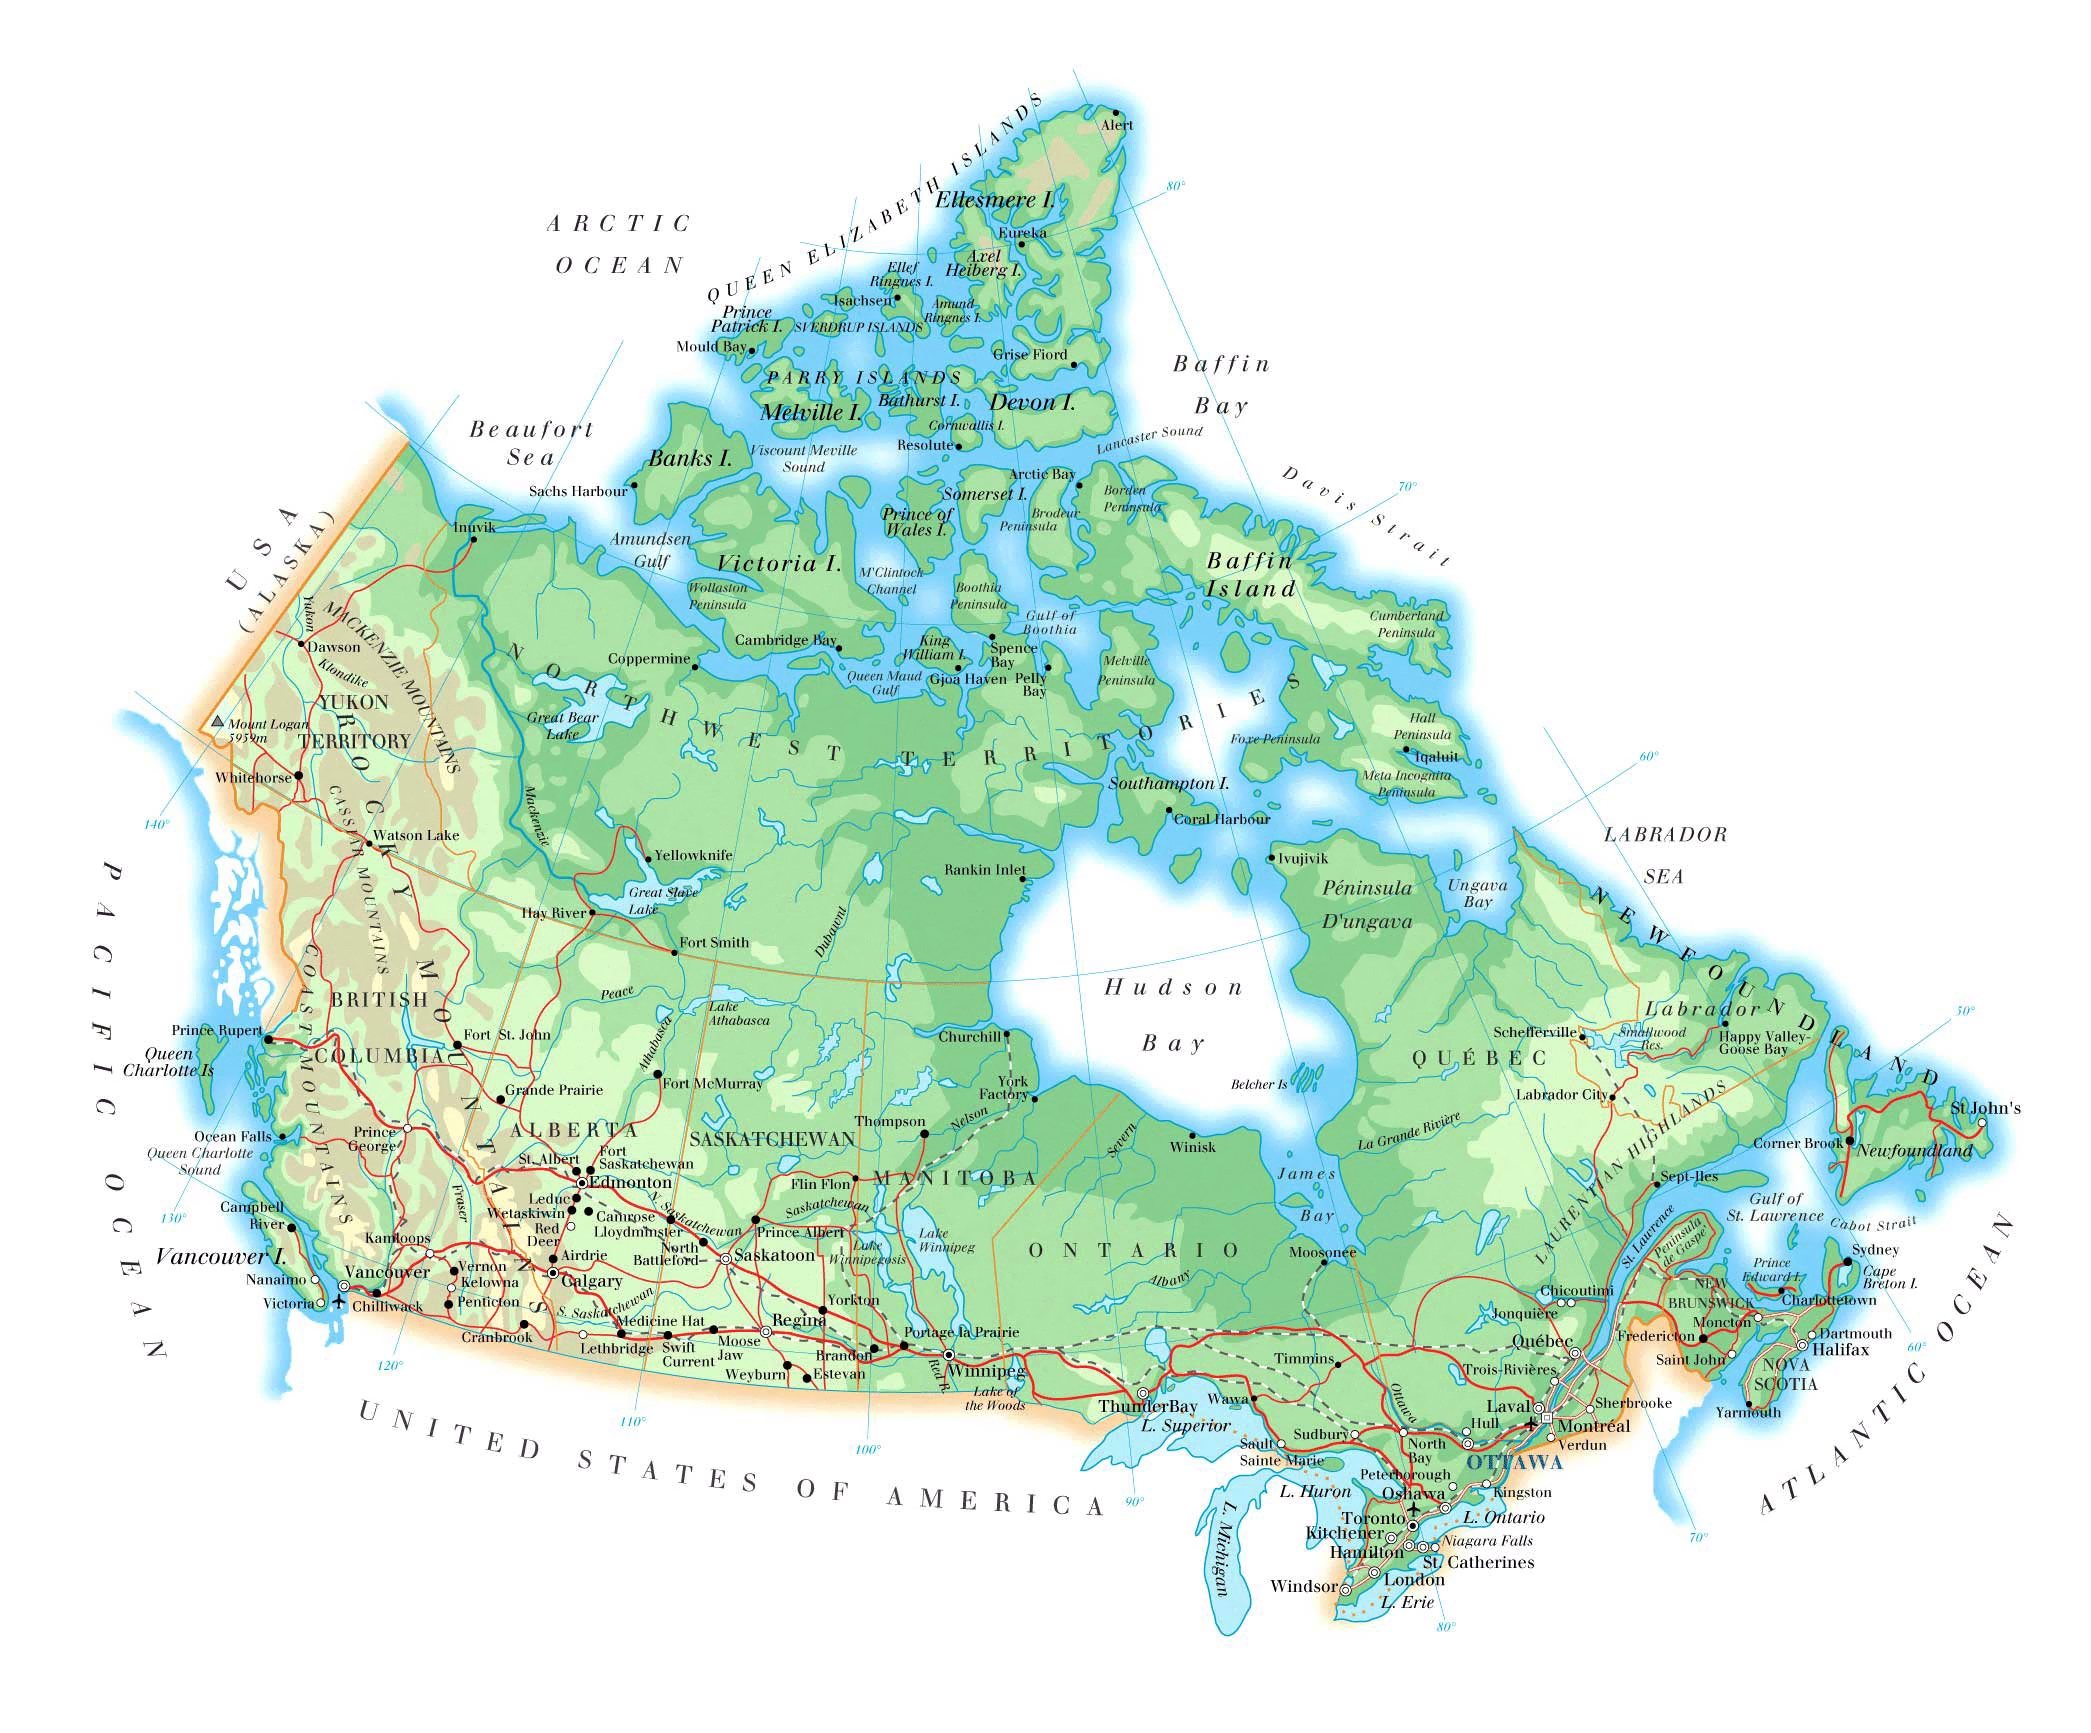 Canadian GeoConnections Program 